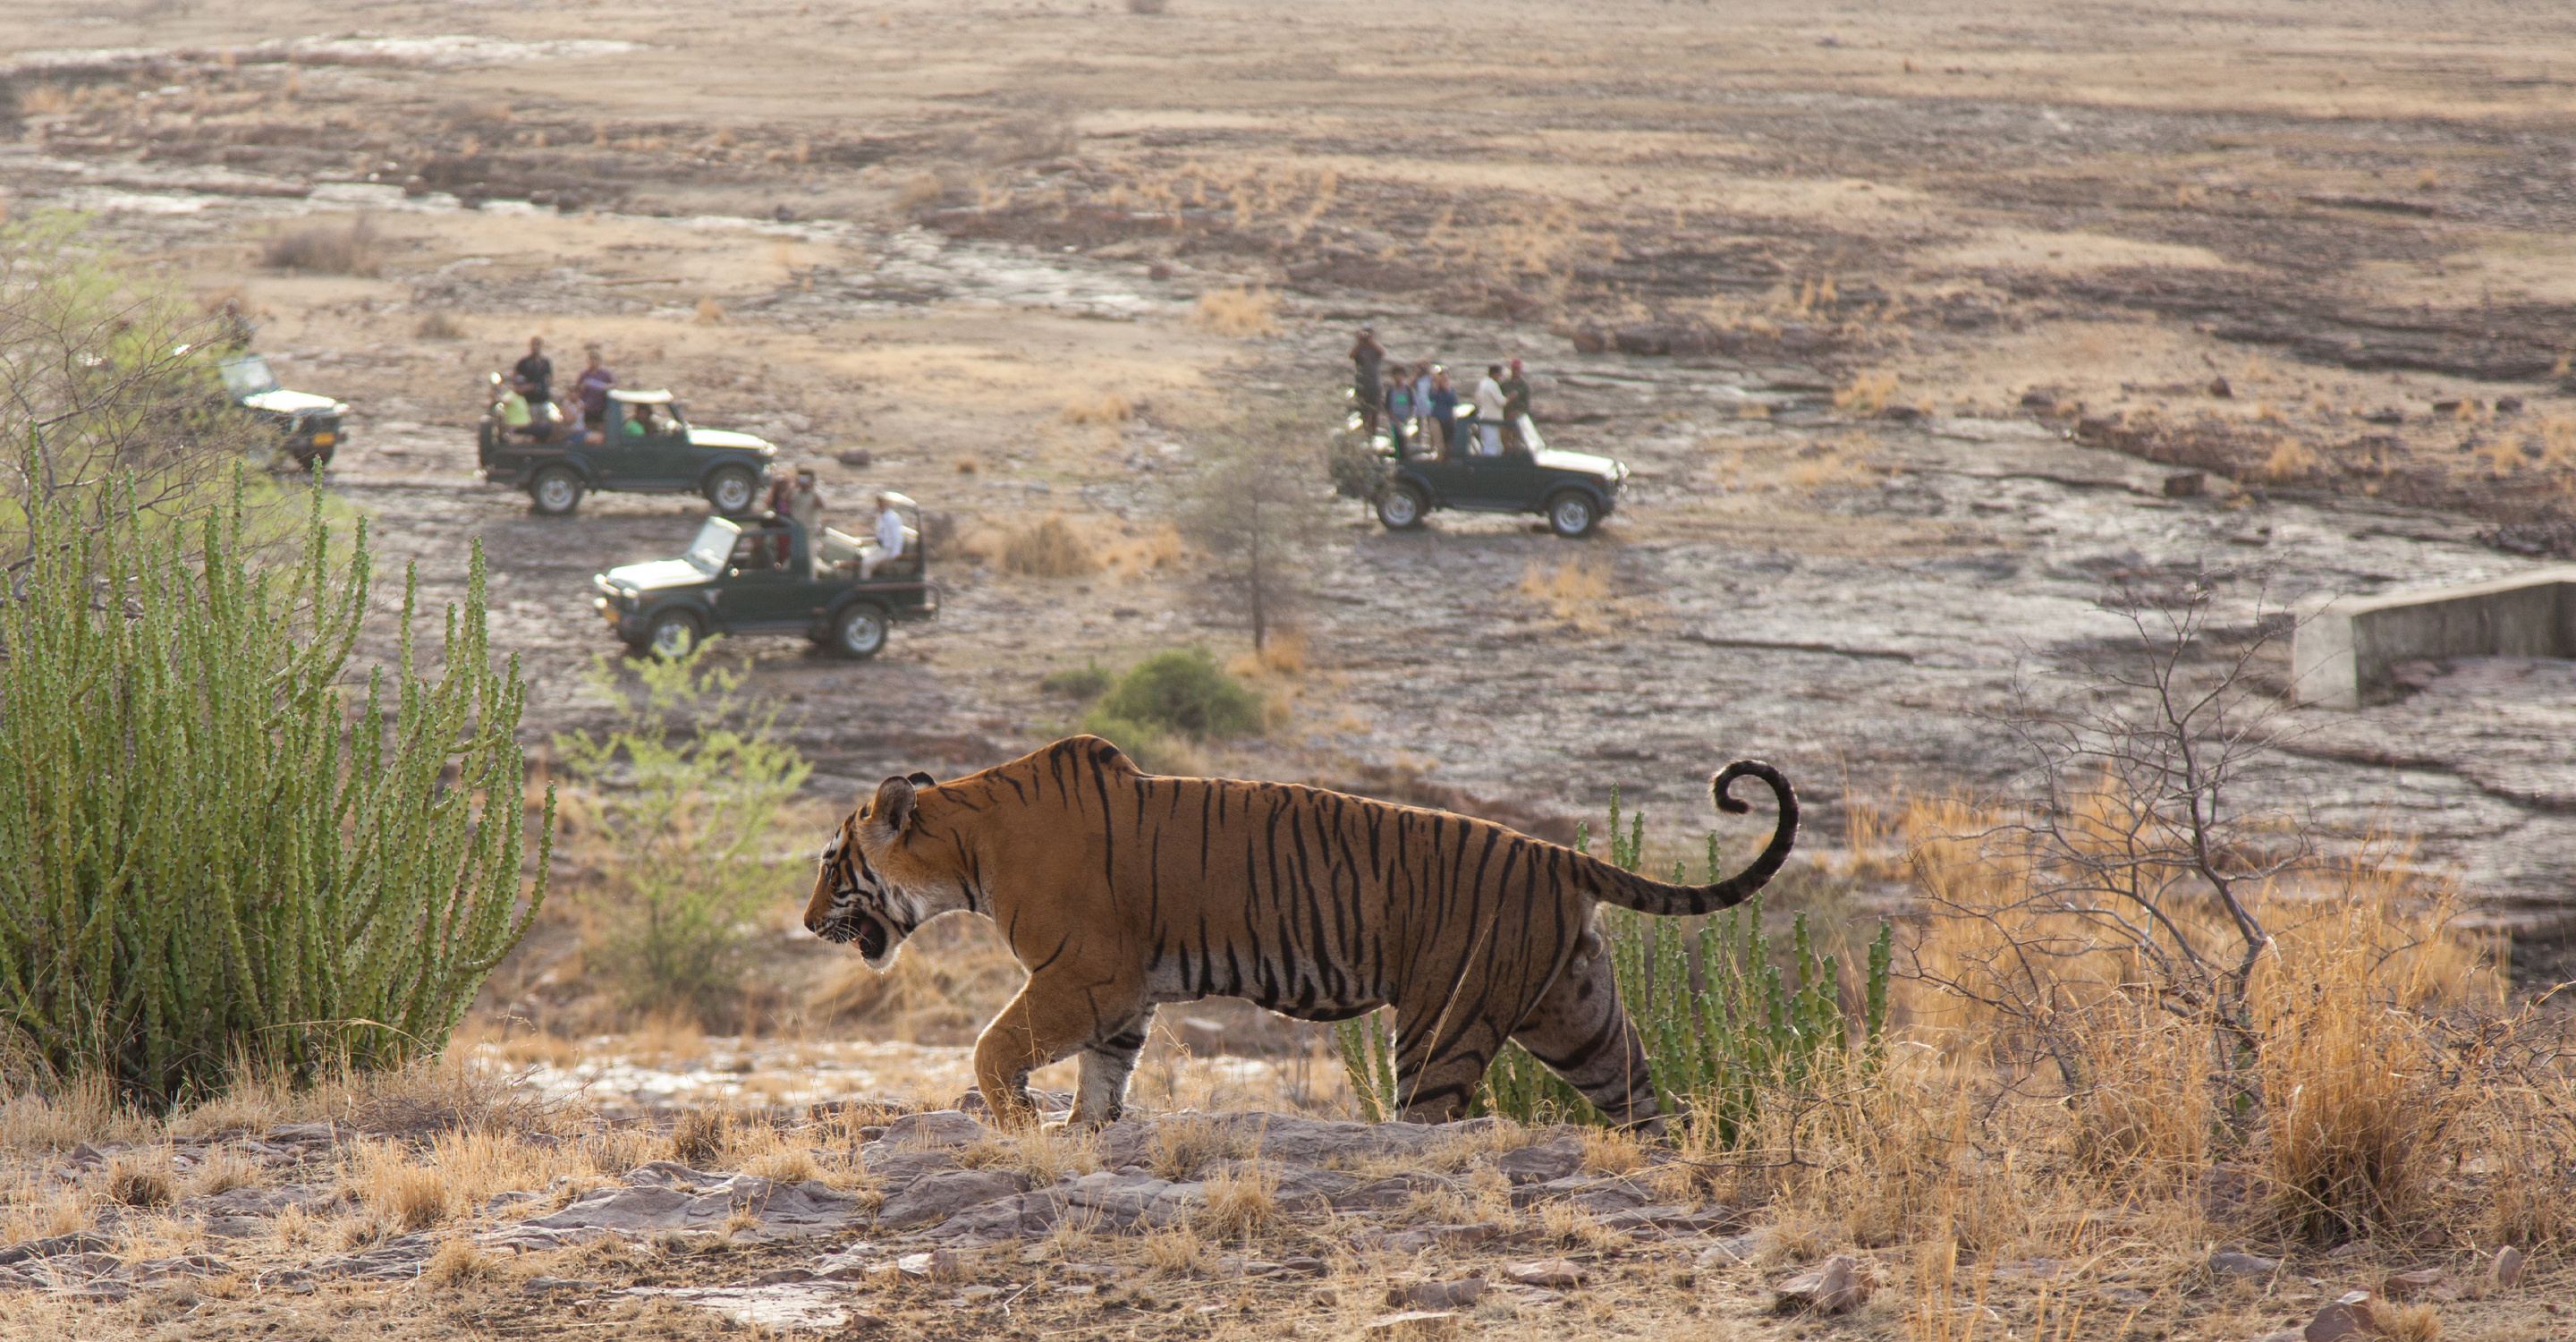 A tiger walks along a hillside above safari vehicles in Ranthambore National Park, India